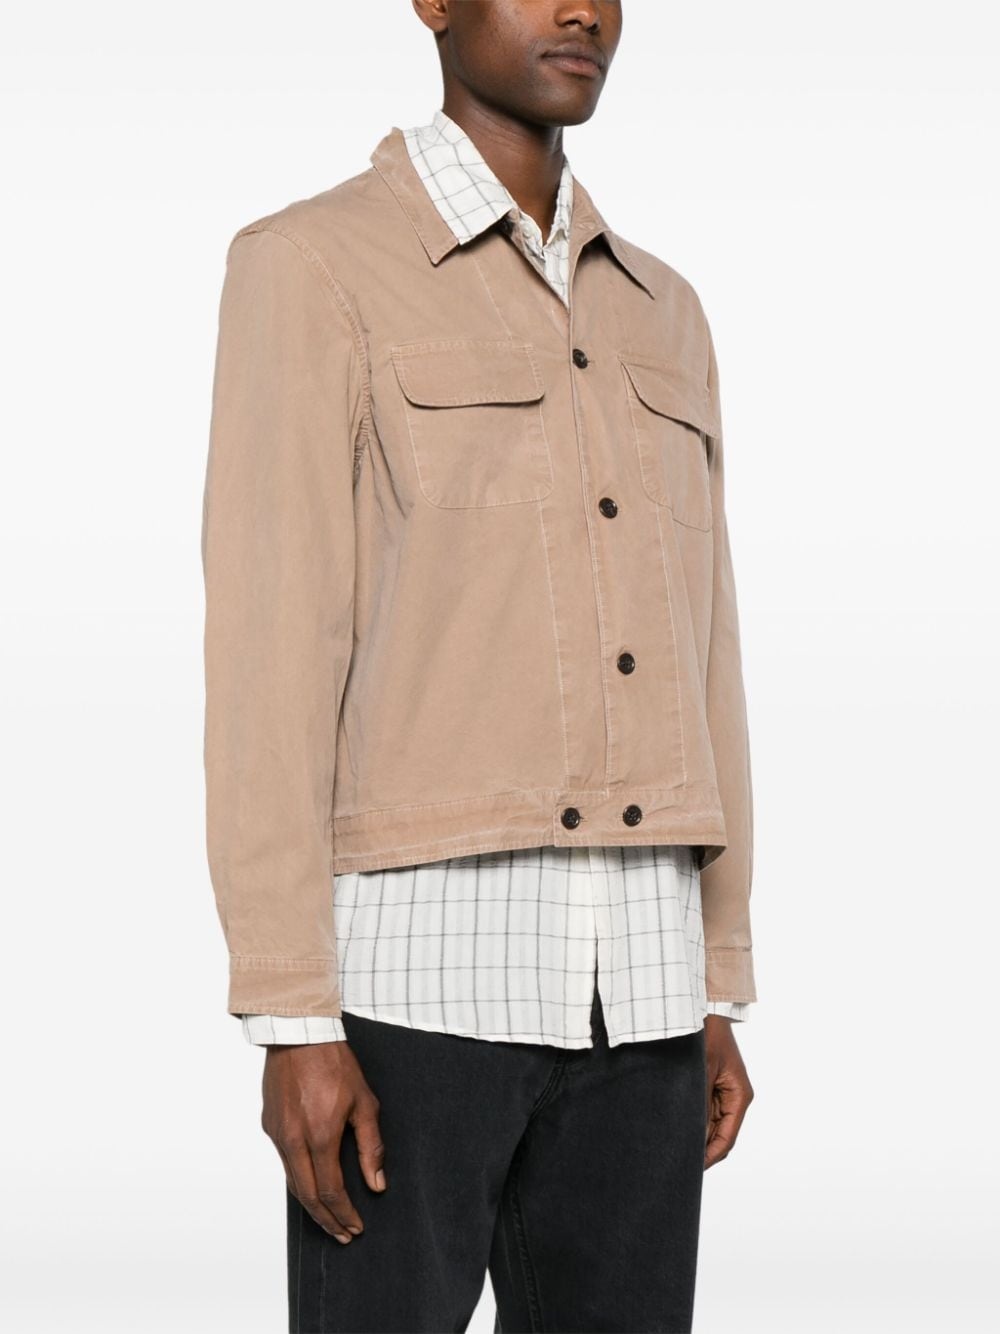 Coach cotton shirt jacket - 3